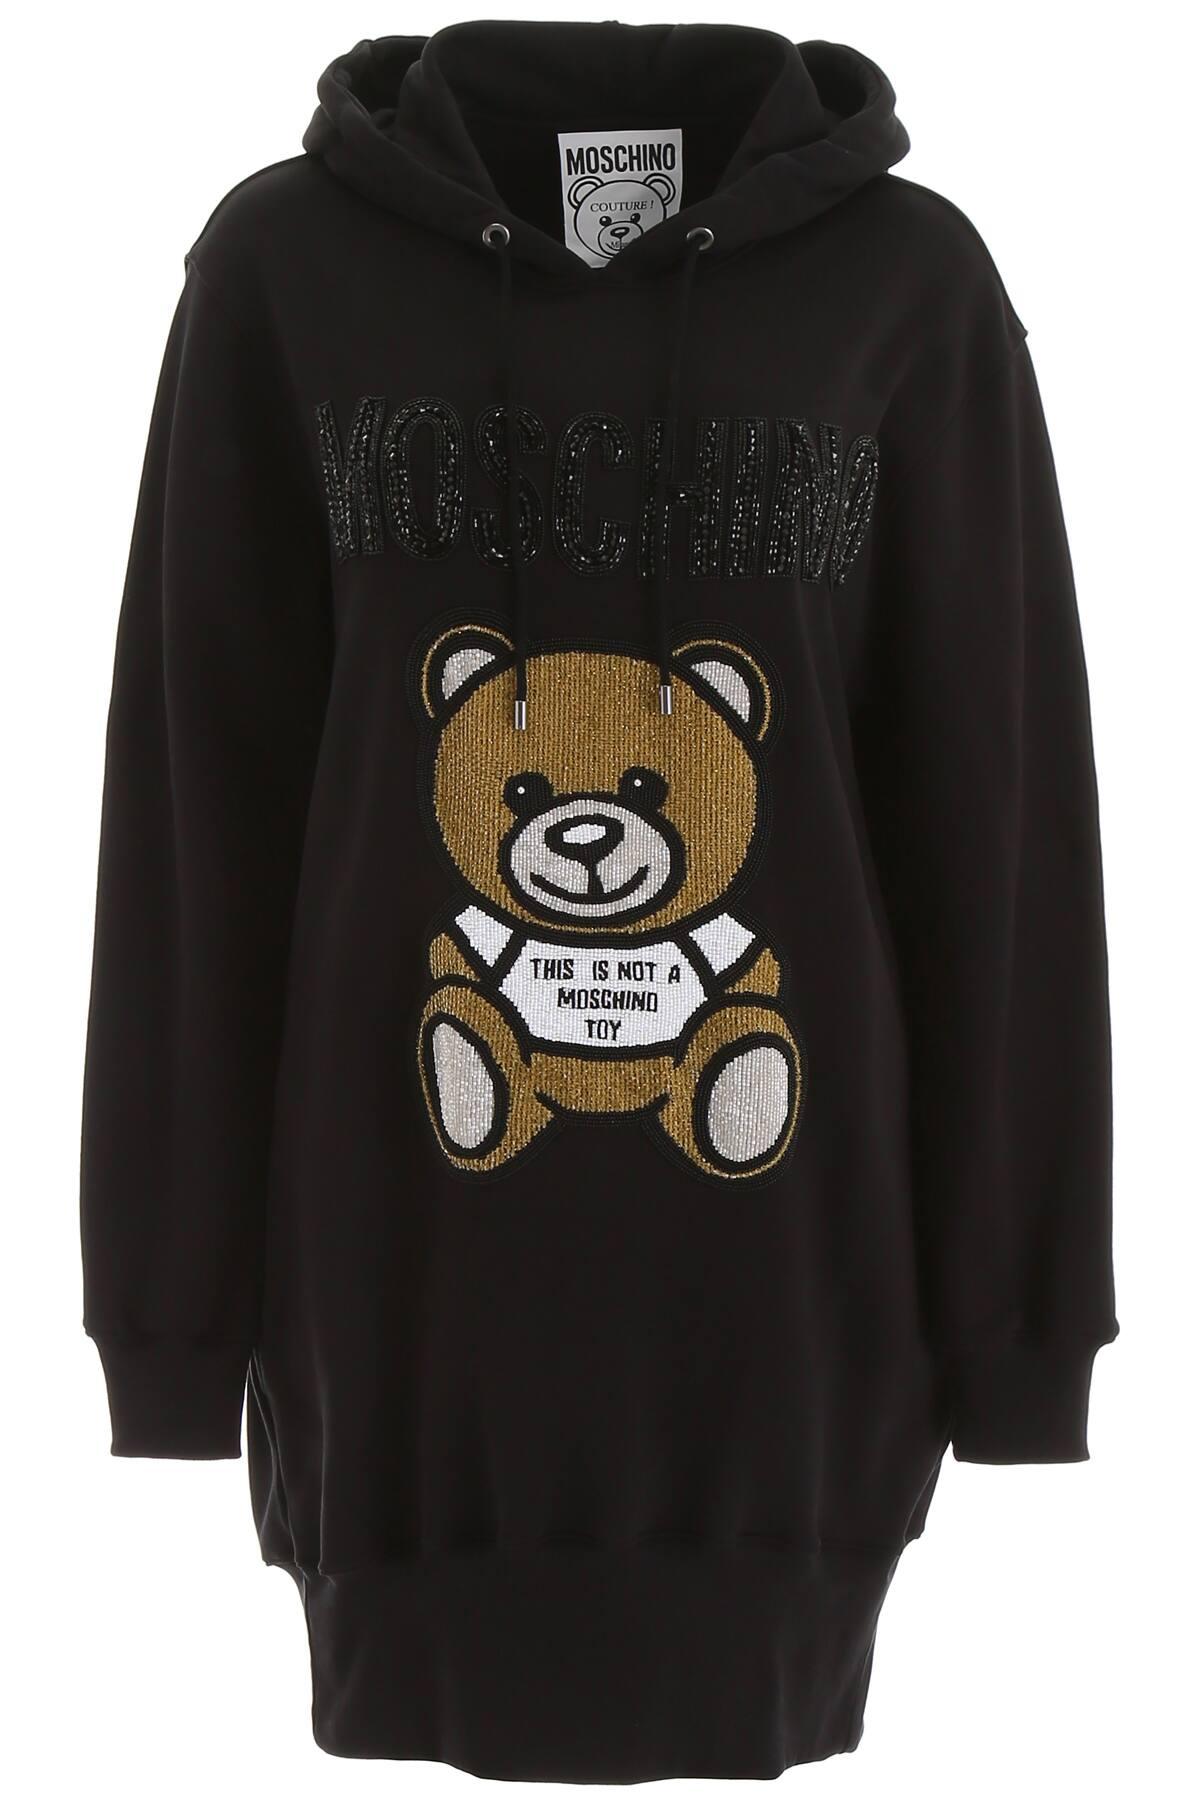 Moschino Teddy Bear Hoodie Dress in Black | Lyst